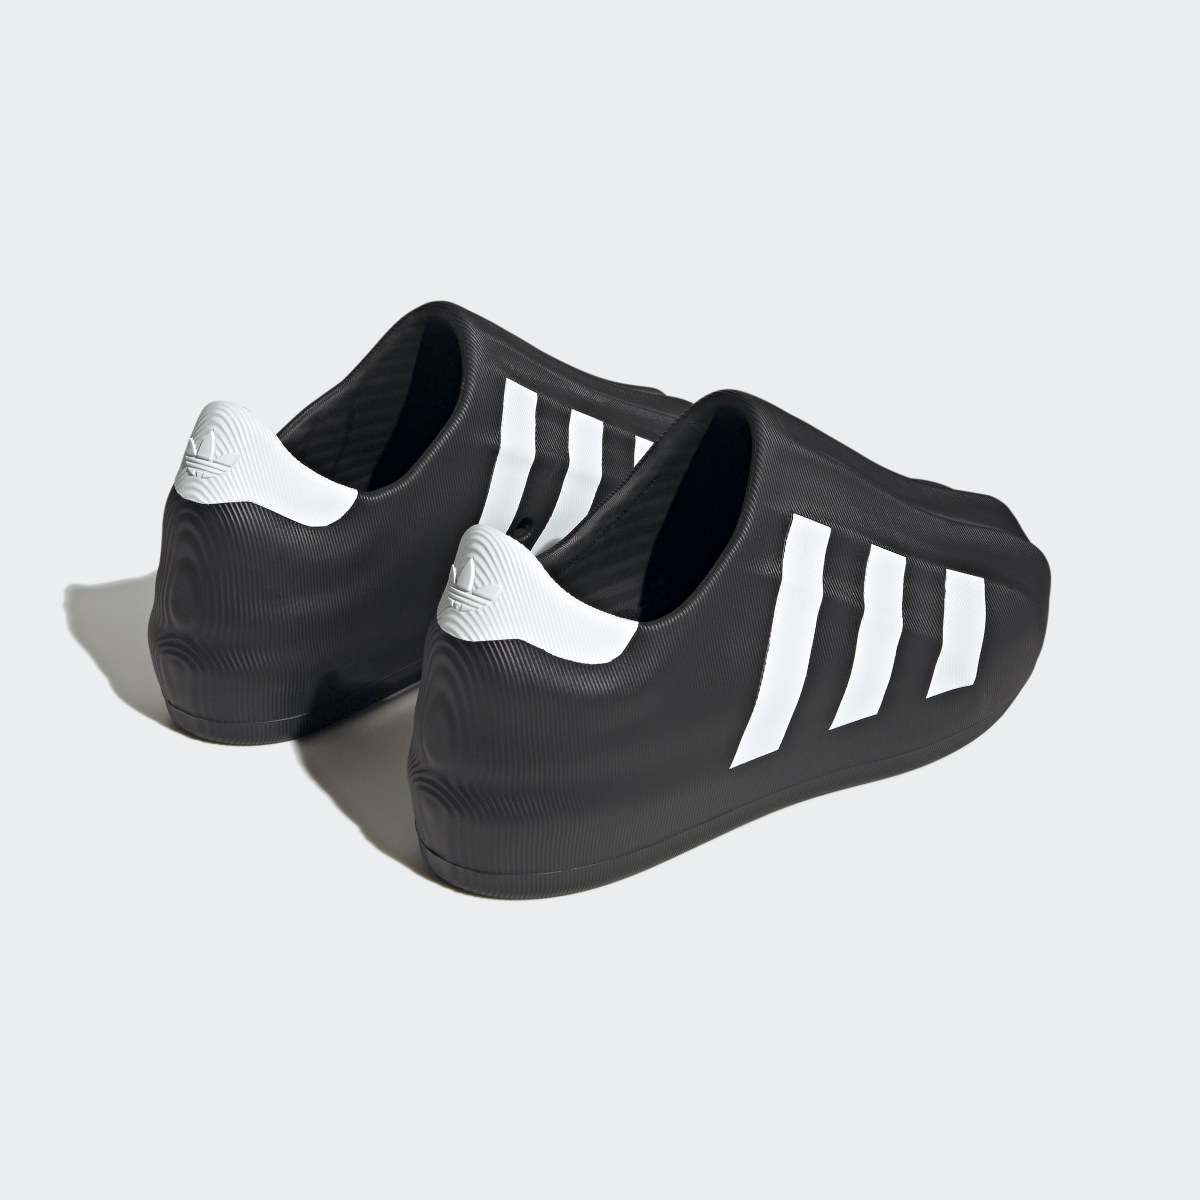 Adidas Superstar Schuh. 6